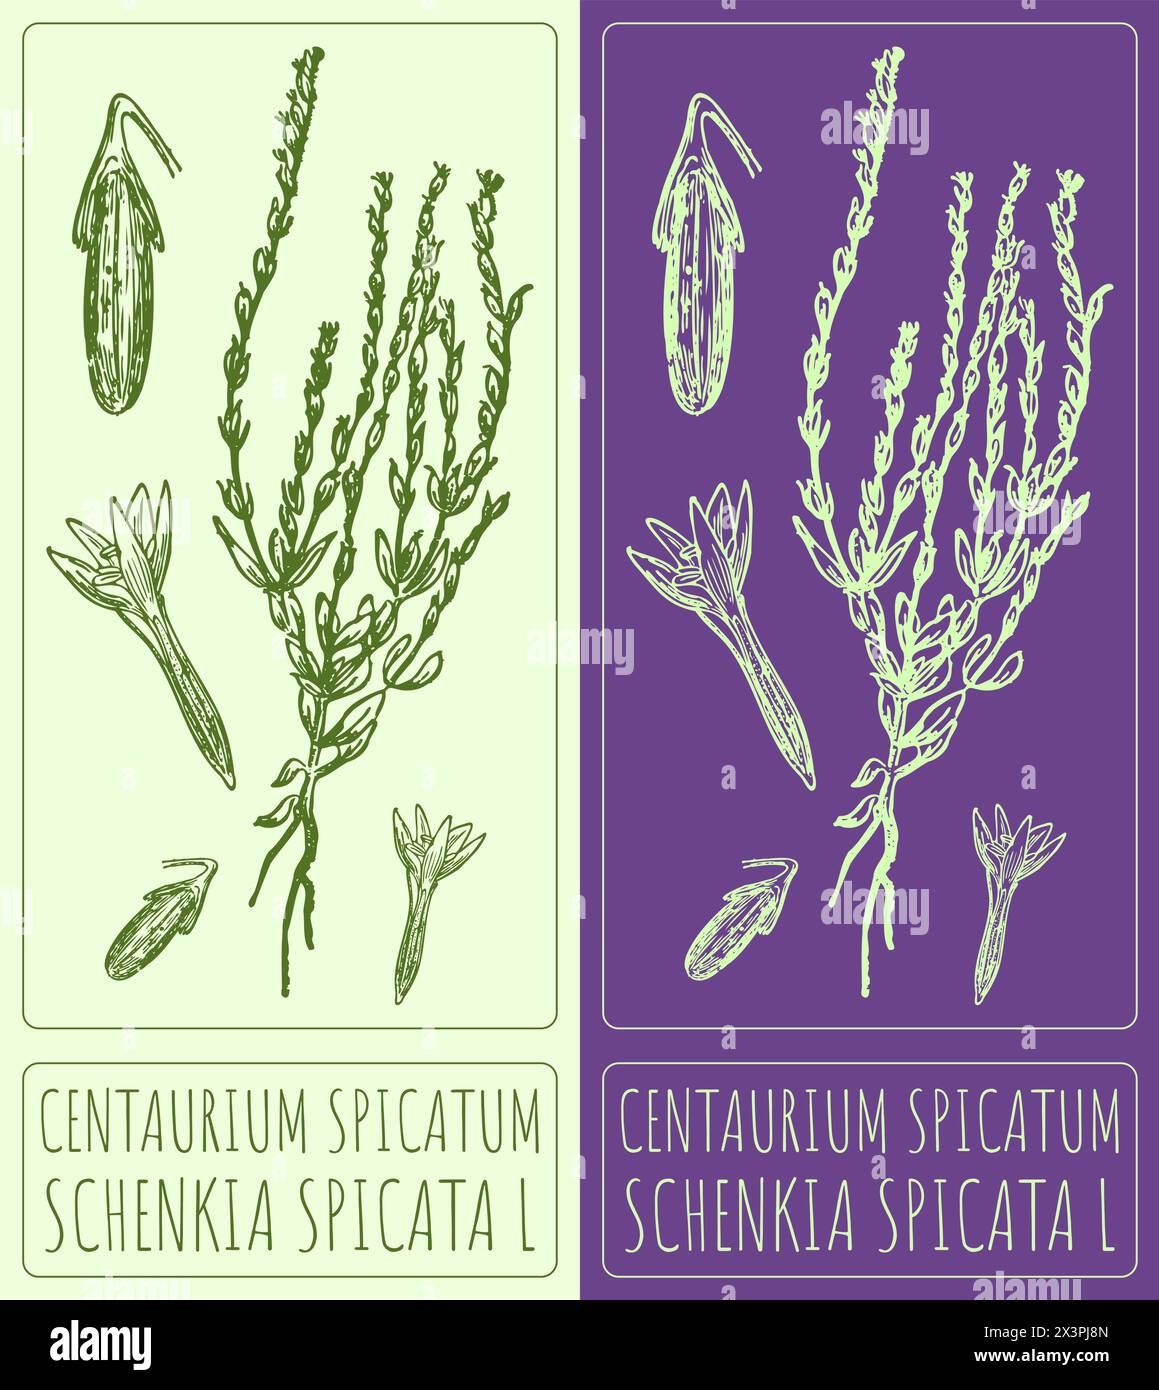 Vector drawing Centaurium spicatum. Hand drawn illustration. The Latin name is Schenkia spicata L. Stock Vector